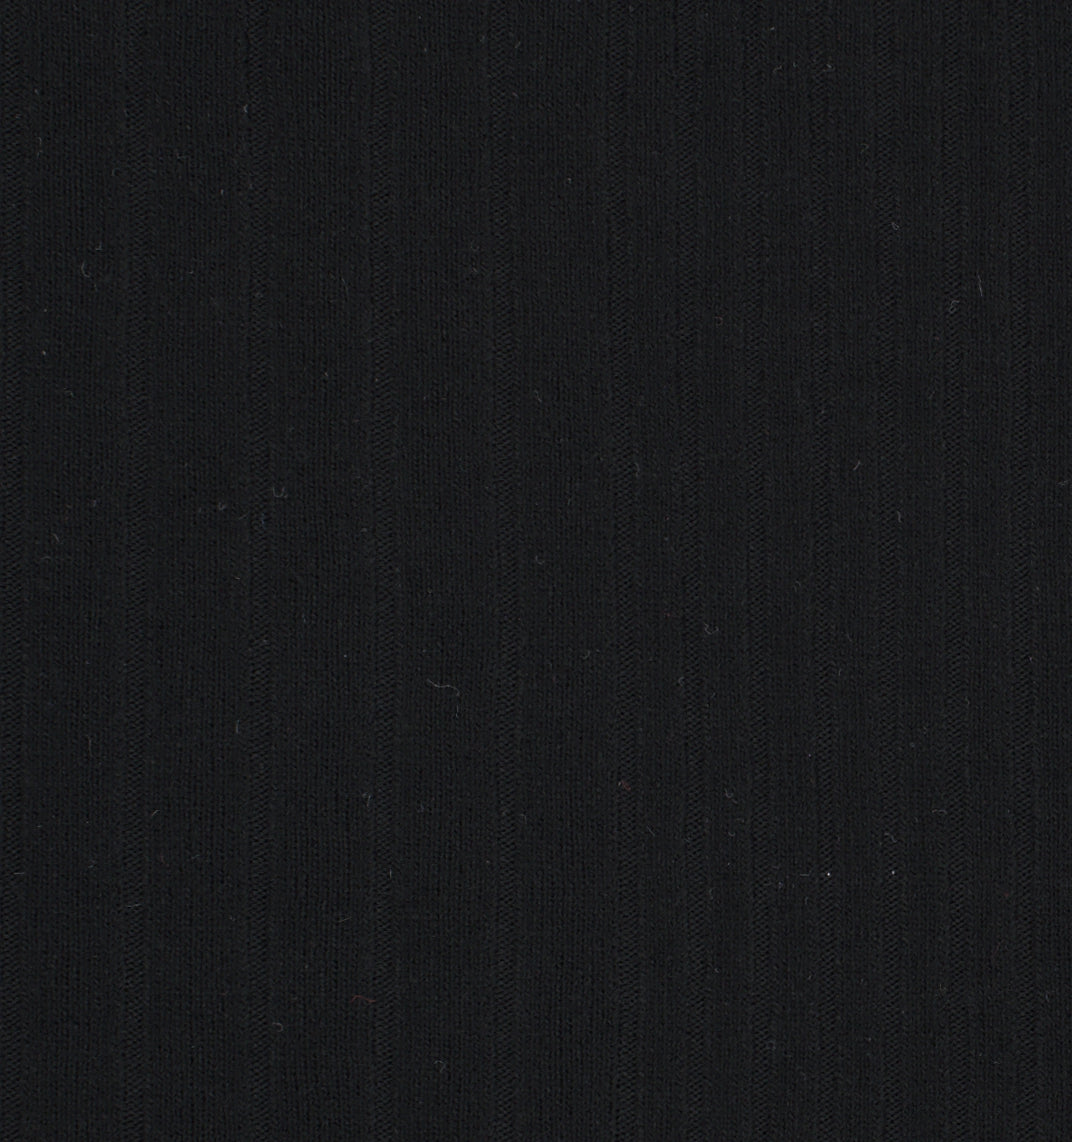 17002-04 Black Corduroy Plain Dyed Blend 280g/yd 50" black blend corduroy knit plain dyed polyester rayon rib spandex Solid Color, Rib - knit fabric - woven fabric - fabric company - fabric wholesale - fabric b2b - fabric factory - high quality fabric - hong kong fabric - fabric hk - acetate fabric - cotton fabric - linen fabric - metallic fabric - nylon fabric - polyester fabric - spandex fabric - chun wing hing - cwh hk - fabric worldwide ship - 針織布 - 梳織布 - 布料公司- 布料批發 - 香港布料 - 秦榮興